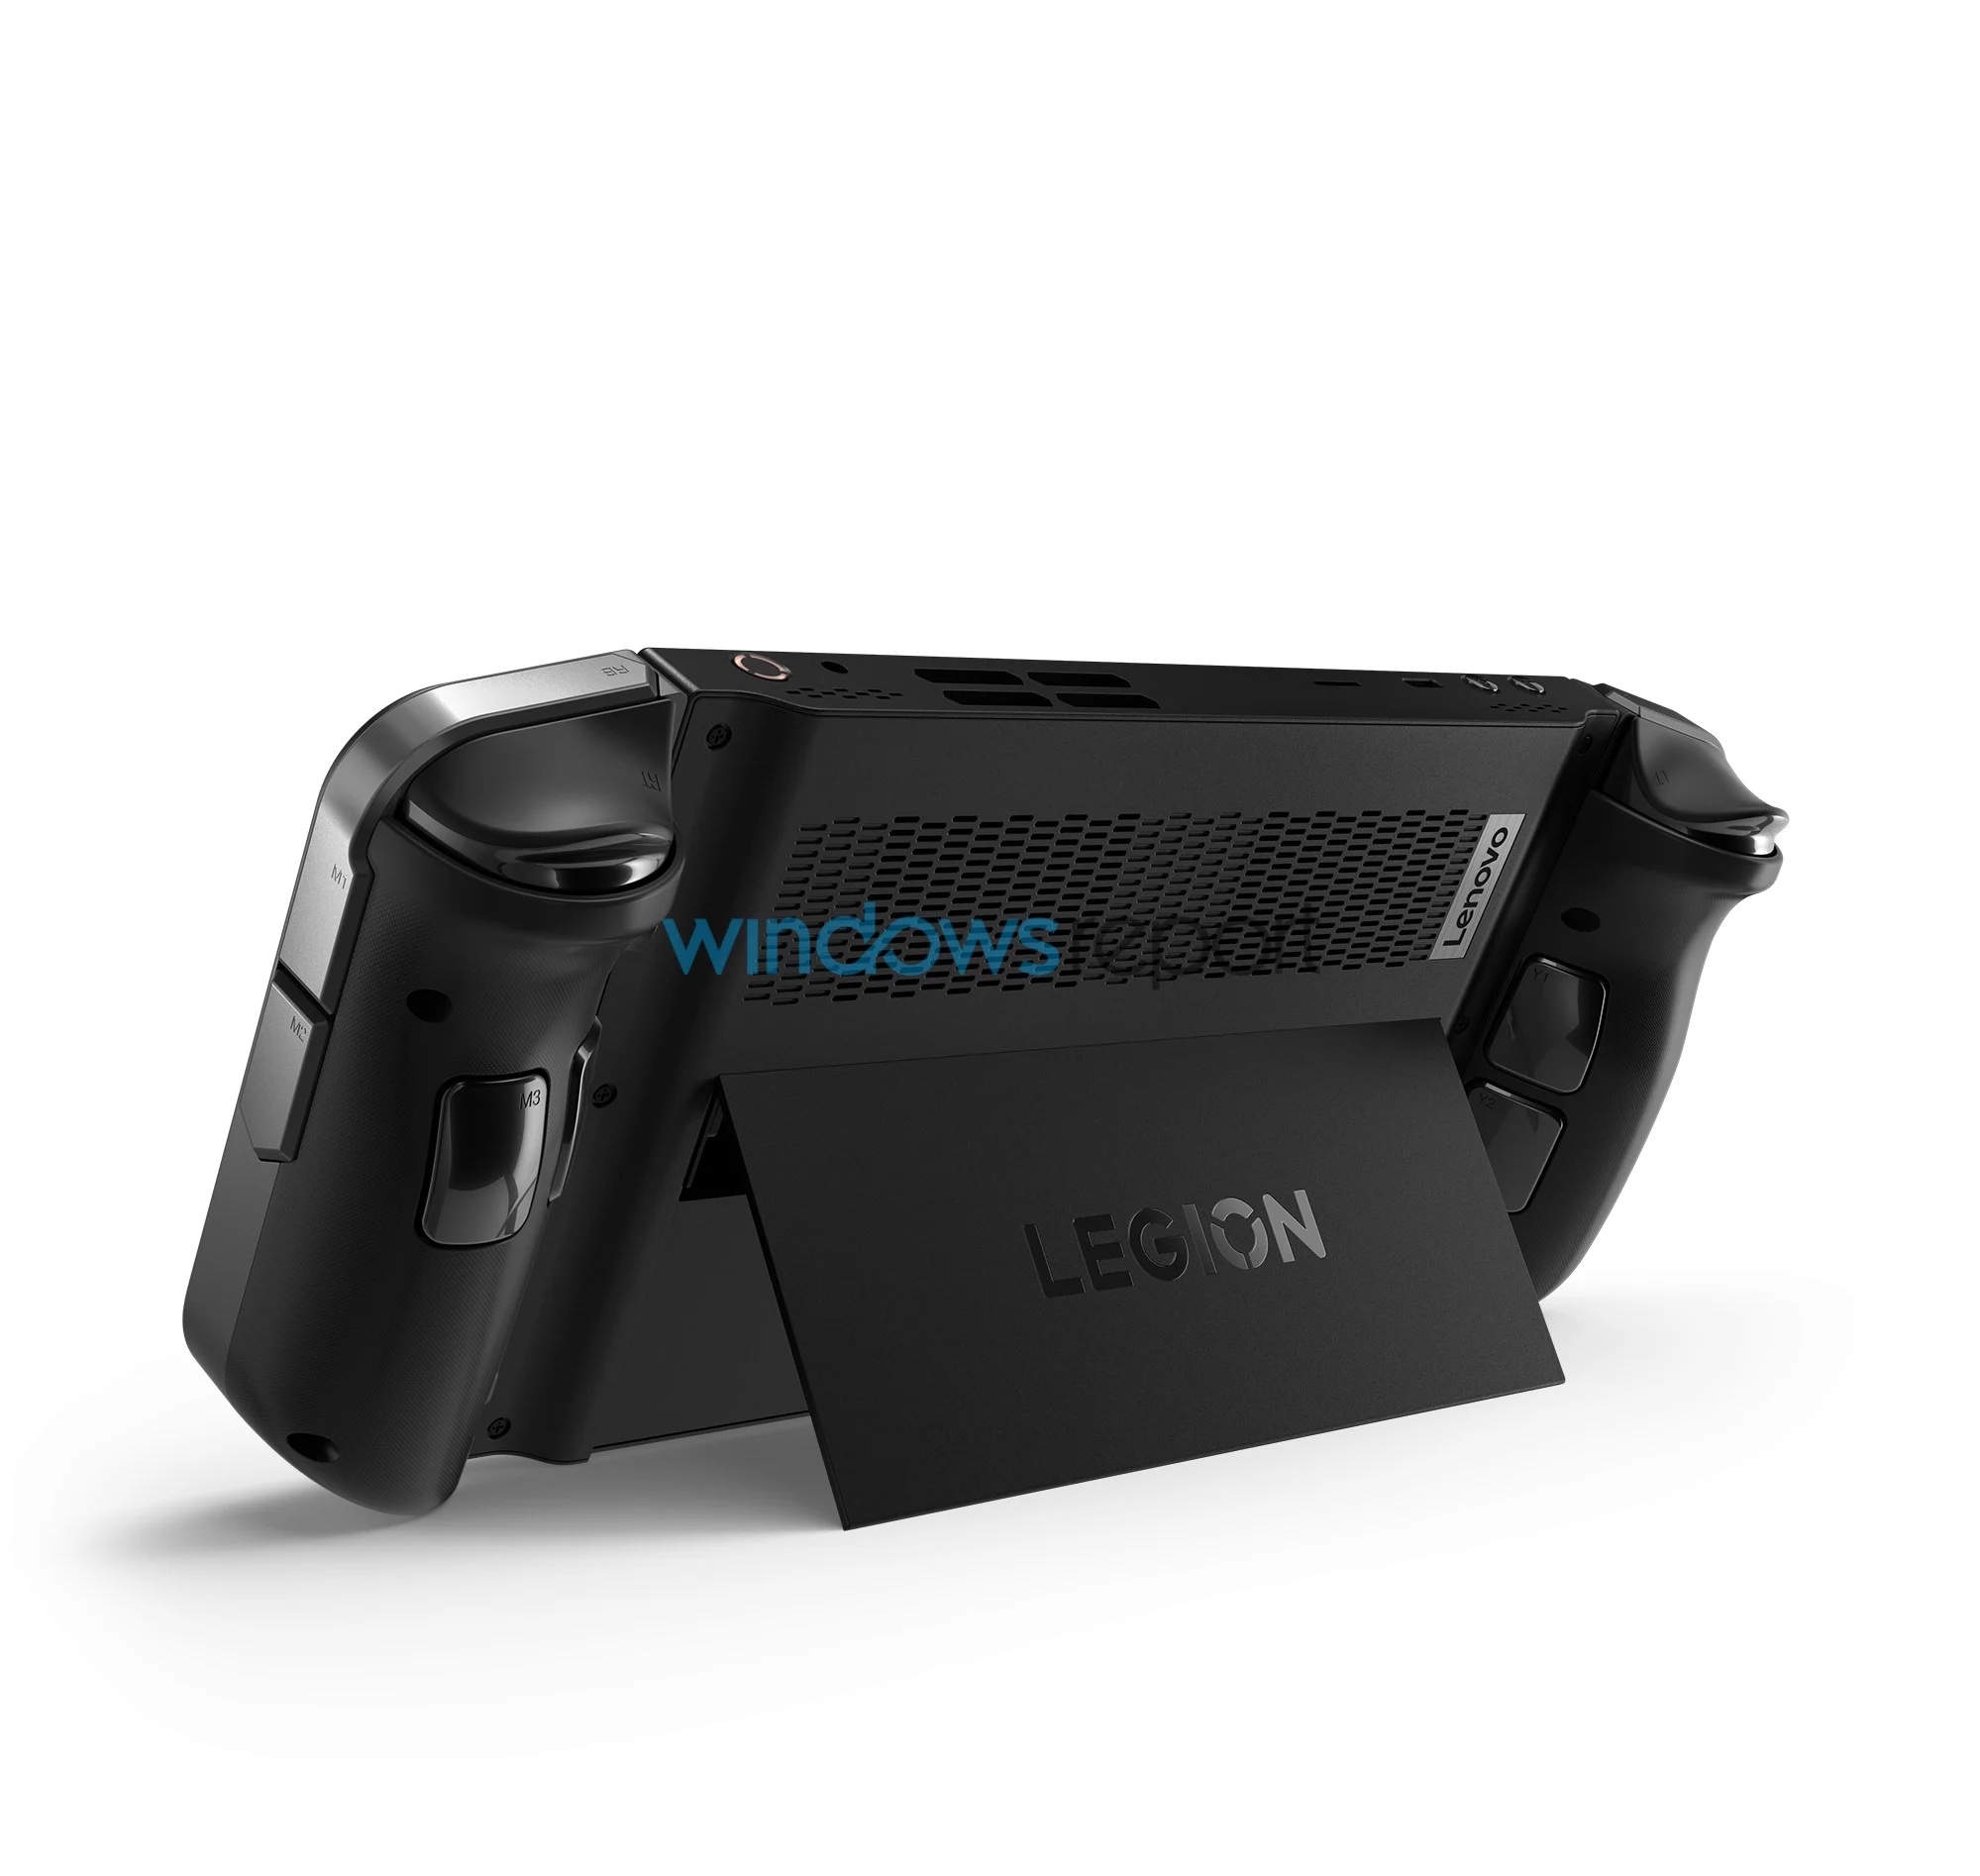 Lenovo's answer to Steam Deck, Legion Go, sports Switch-like detachable  controls